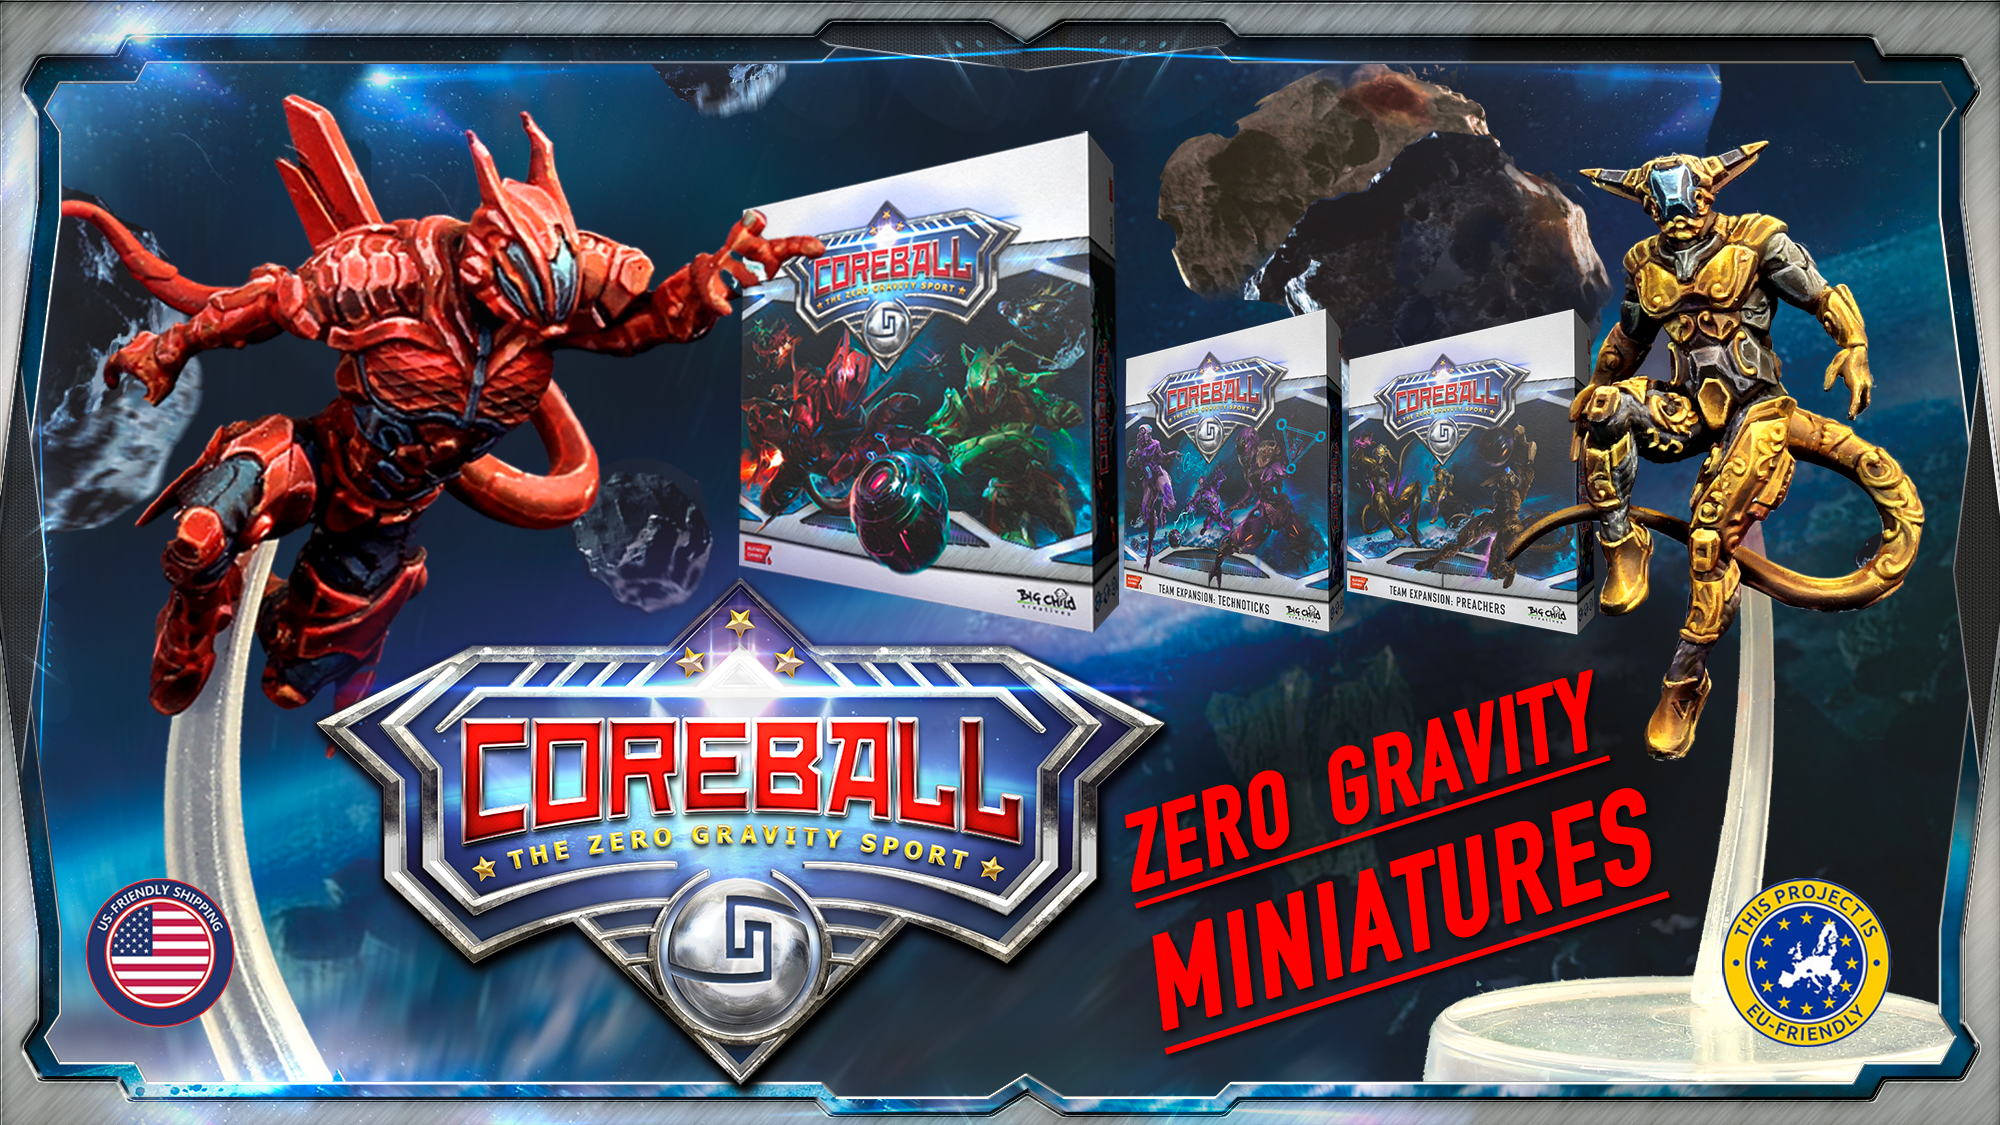 CoreBall live on Kickstarter, featuring flying minis